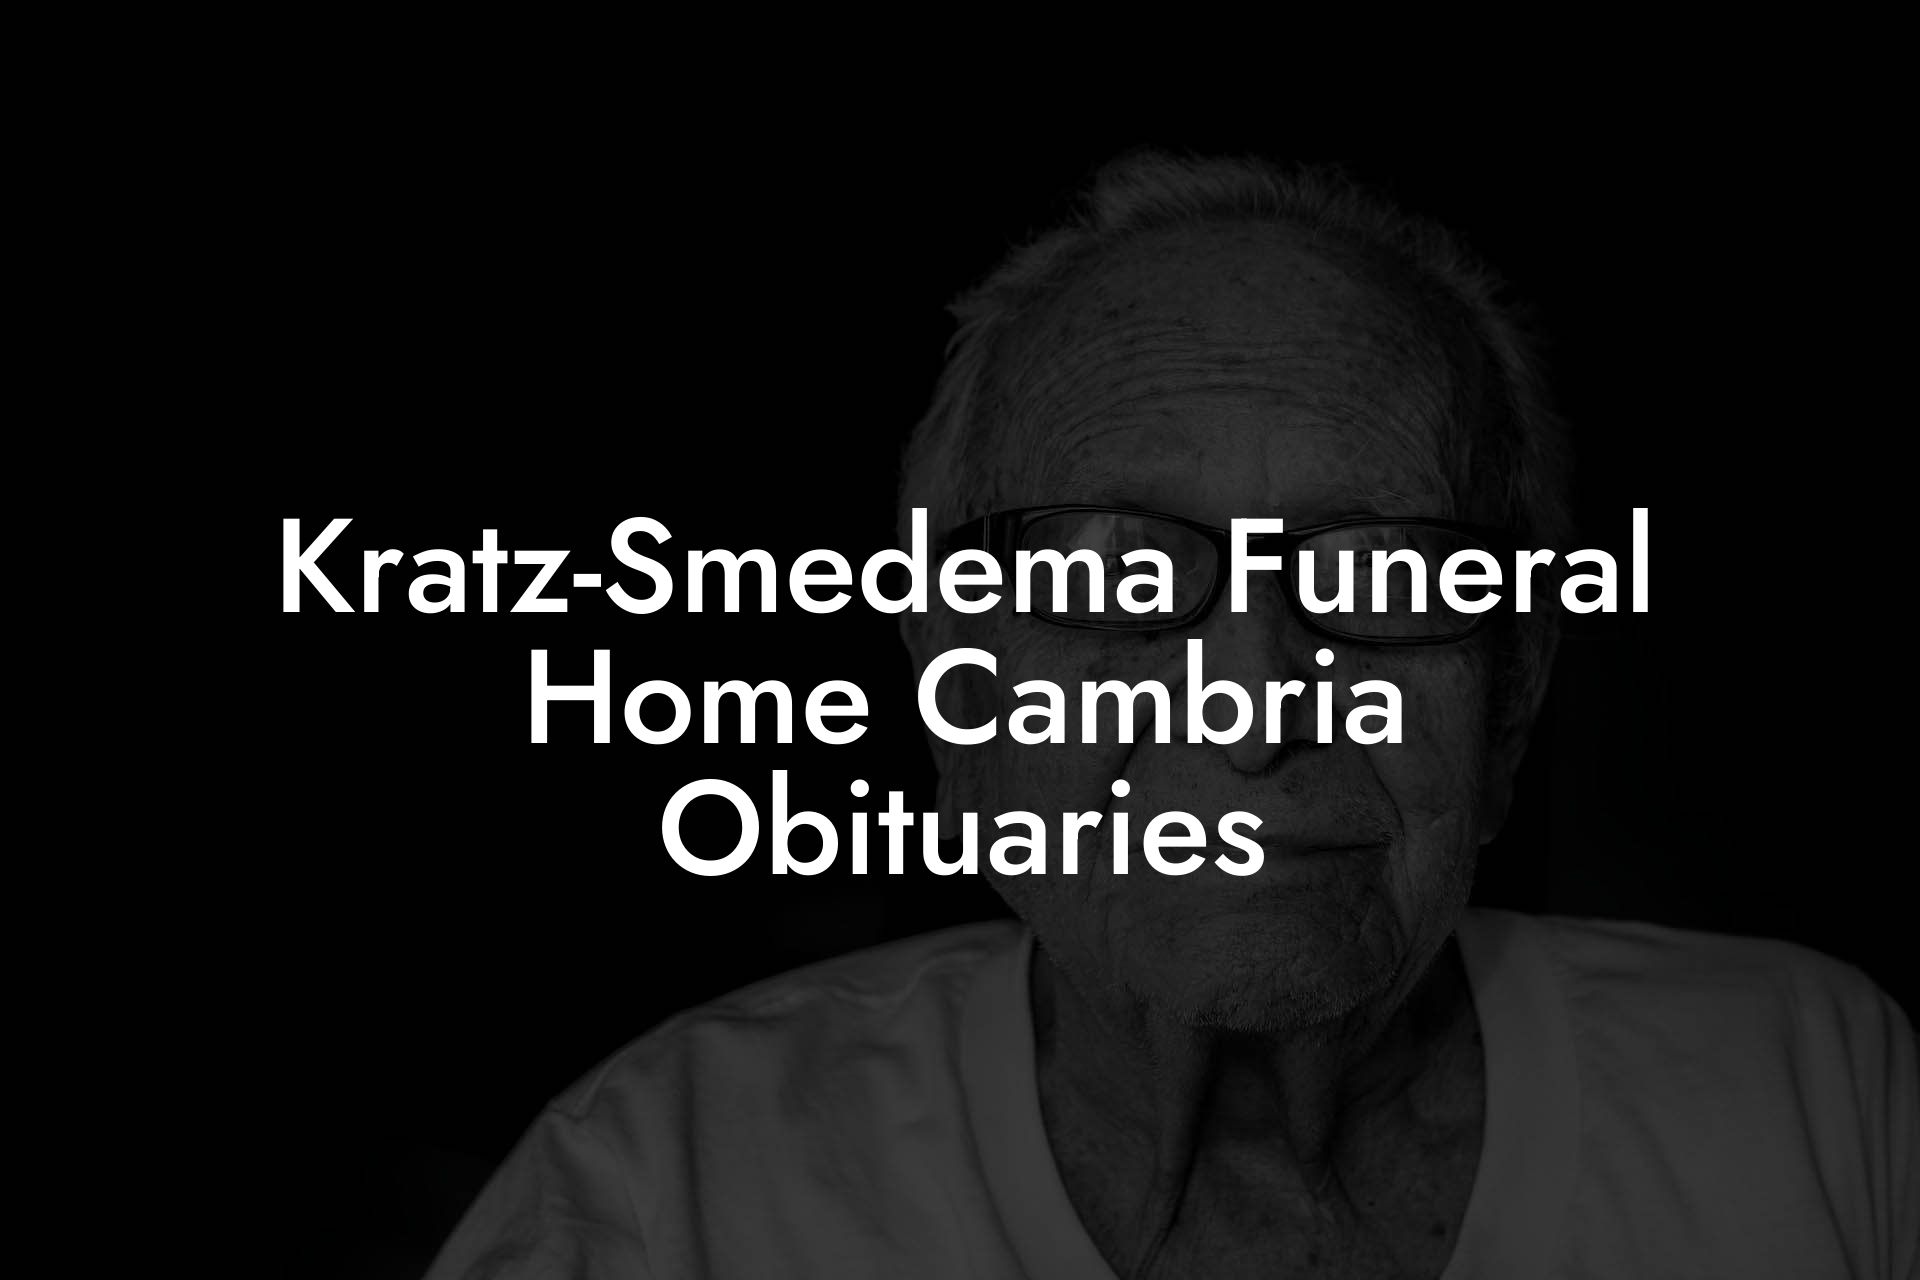 Kratz-Smedema Funeral Home Cambria Obituaries